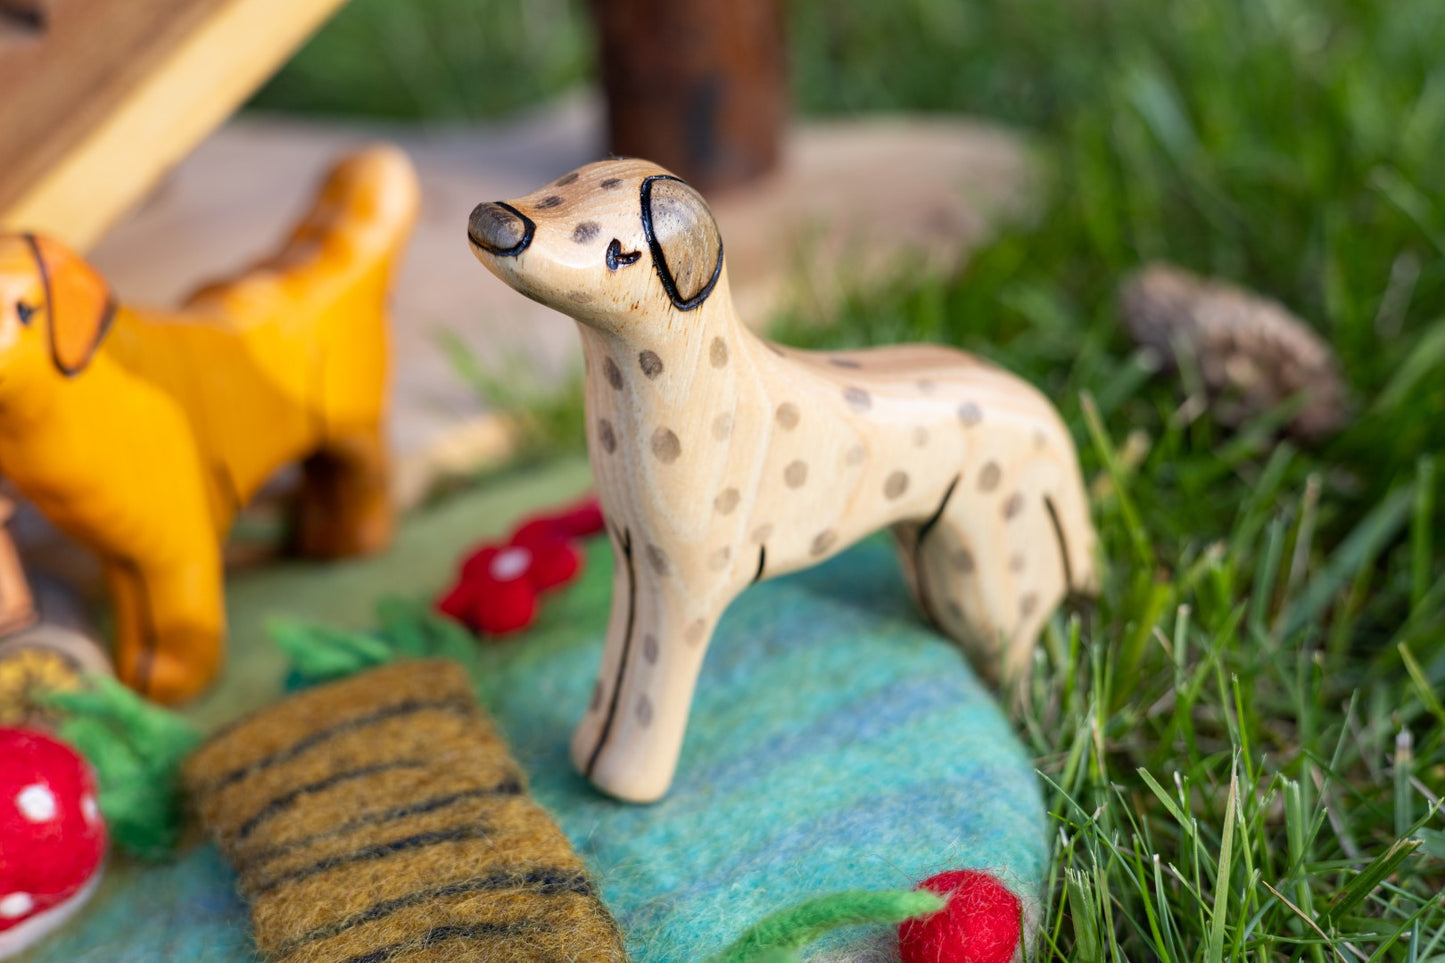 Wooden Dalmatian Toy Dog